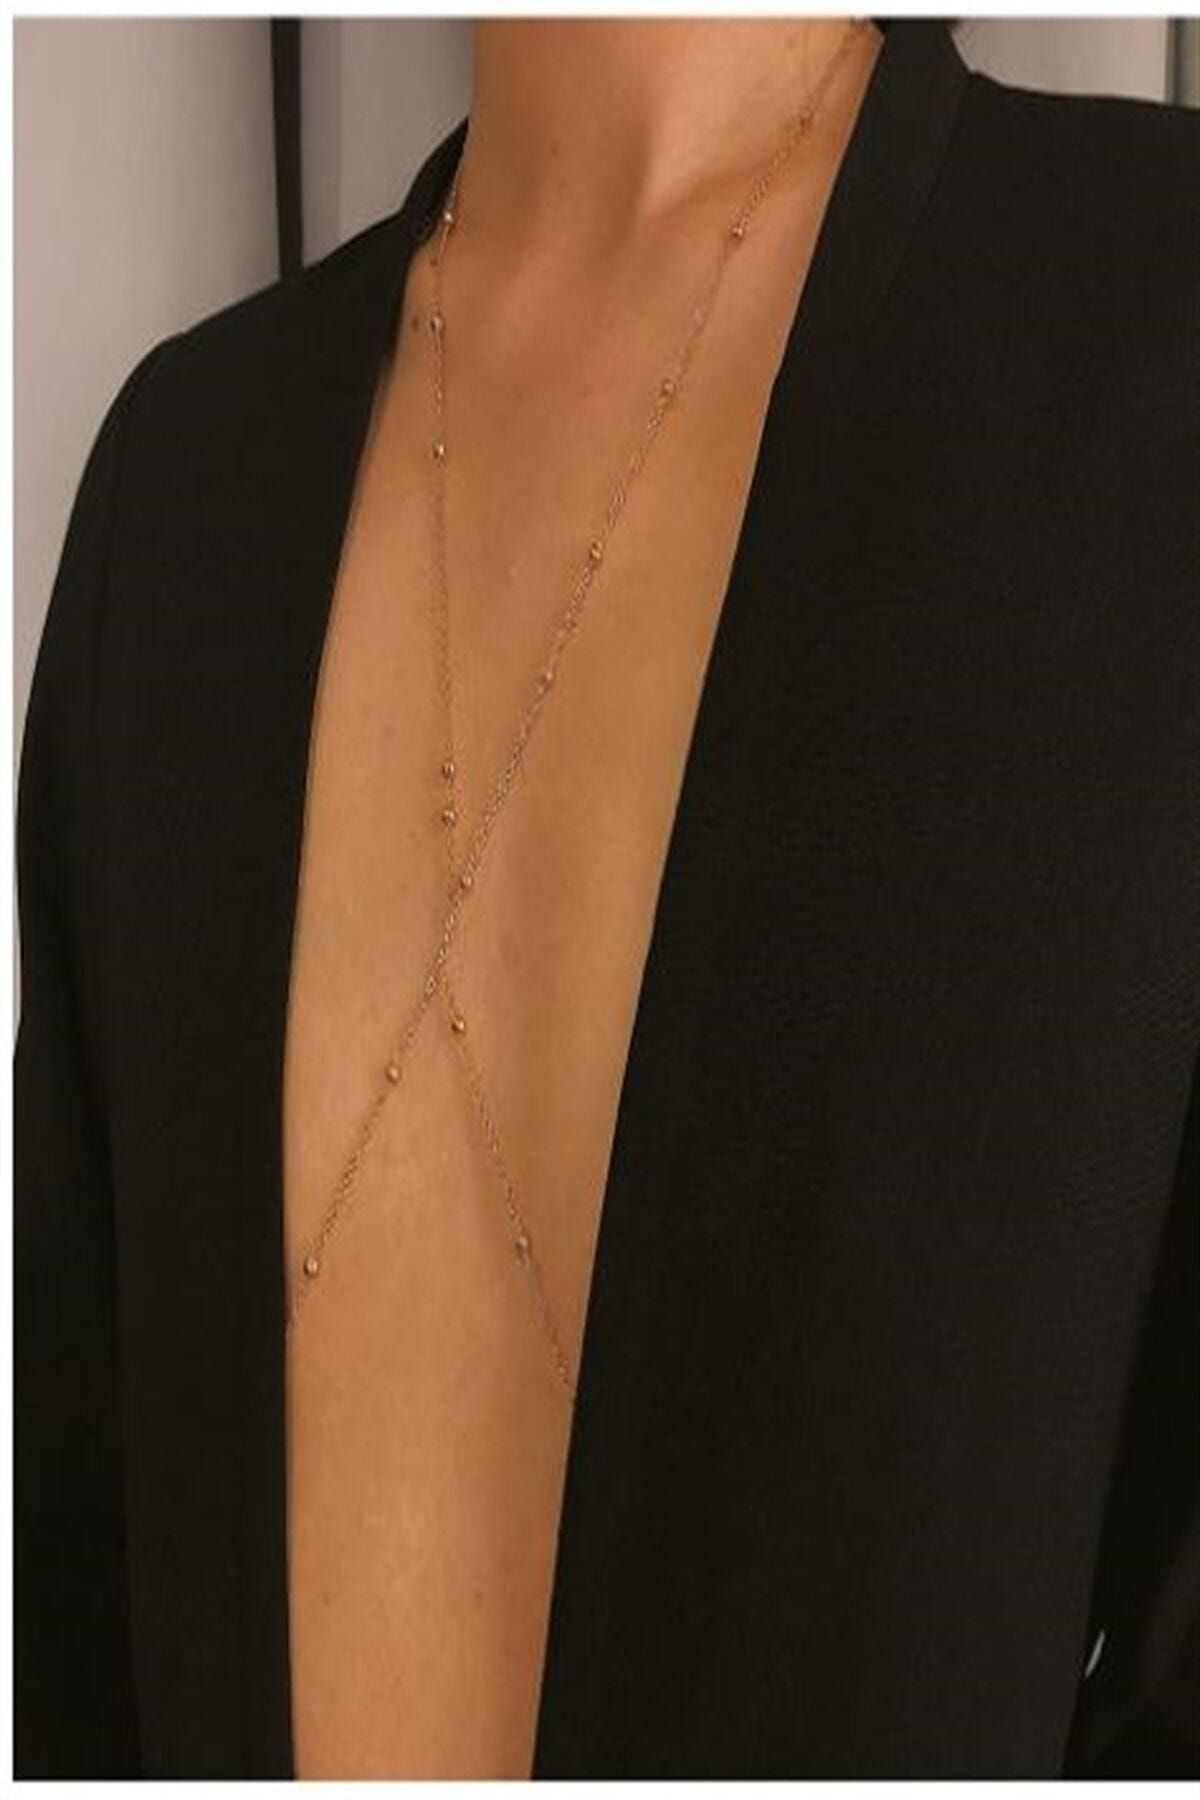 X-Lady Accessories Kadın Mini Top Boncuklu Stylish Vücut Zinciri, Bel Zinciri, Vücut Aksesuarı - Gold